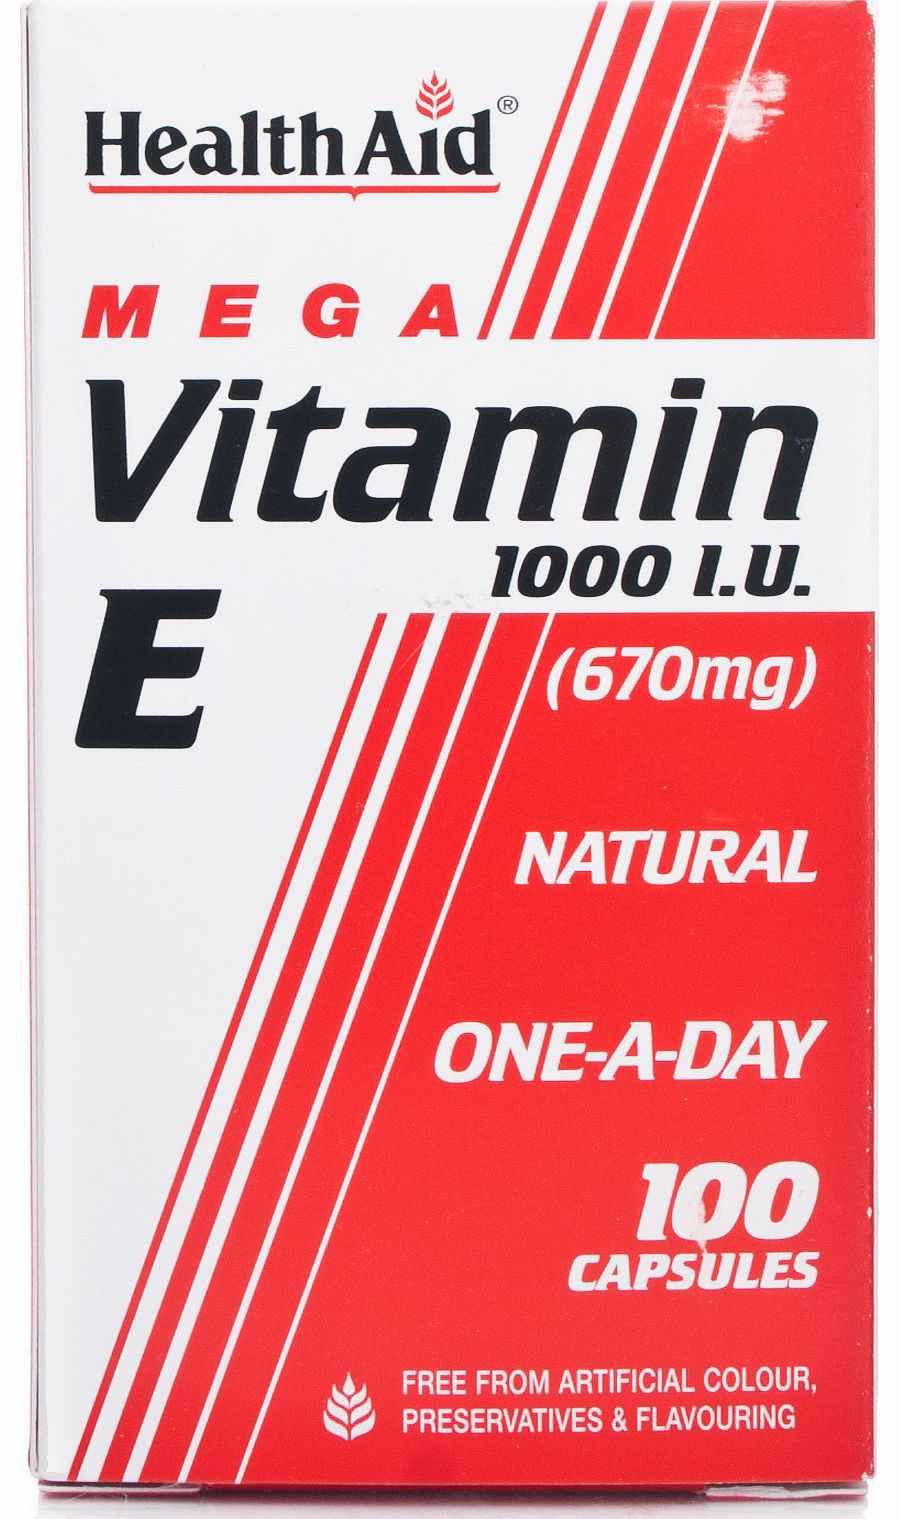 Health Aid Healthaid Vitamin E 1000iu (670mg)